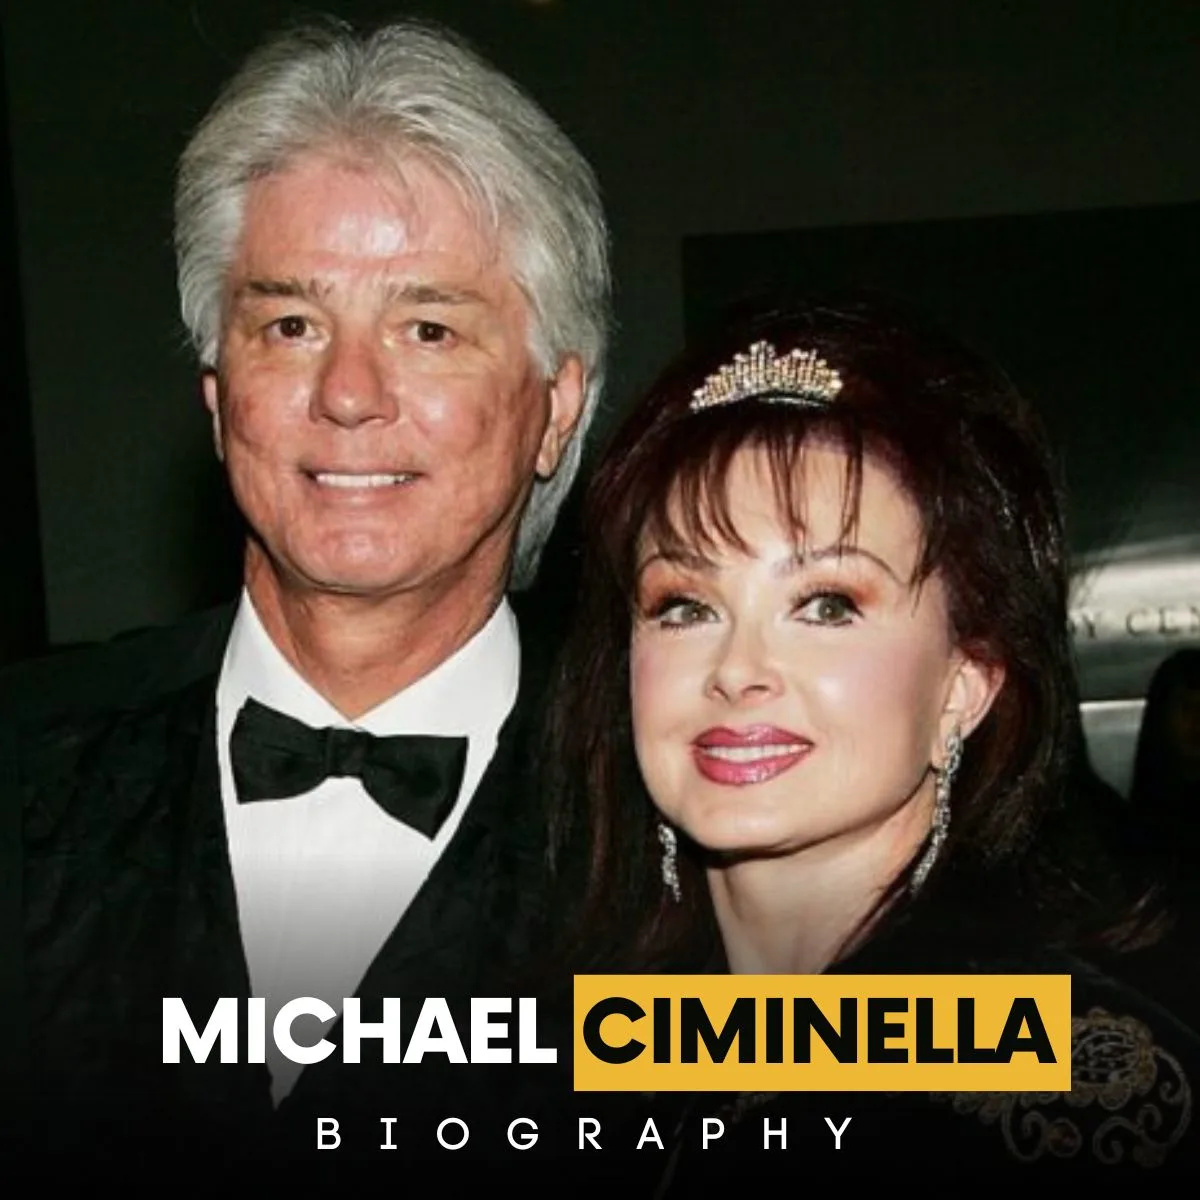 Michael Ciminella Biography